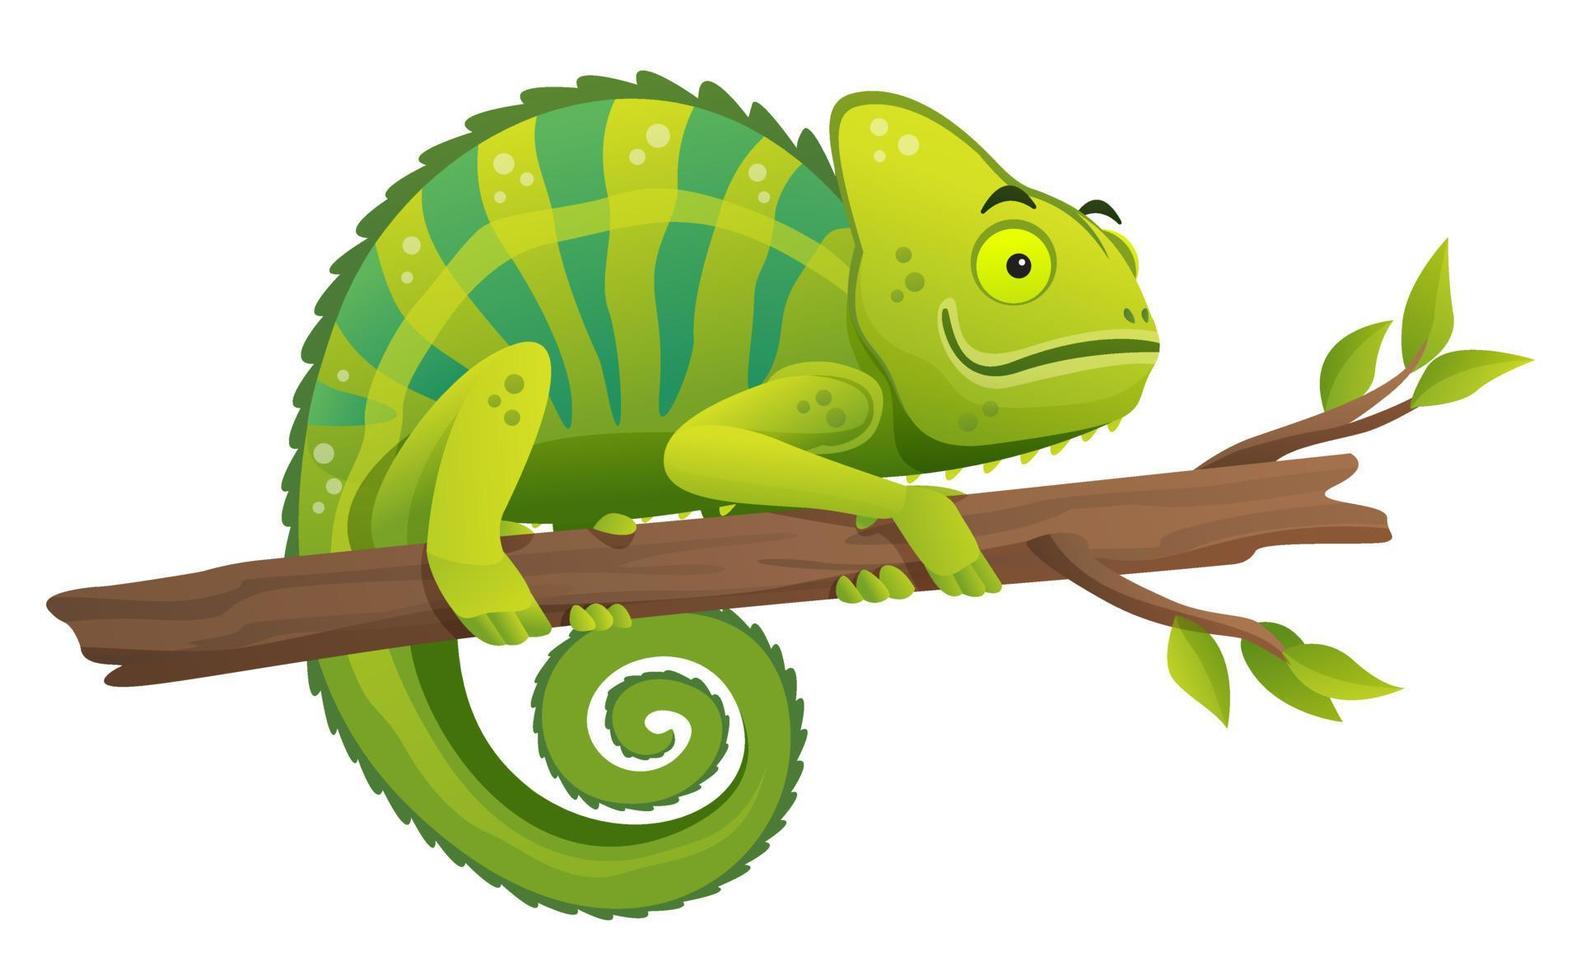 Cute chameleon sitting on branch cartoon illustration vector